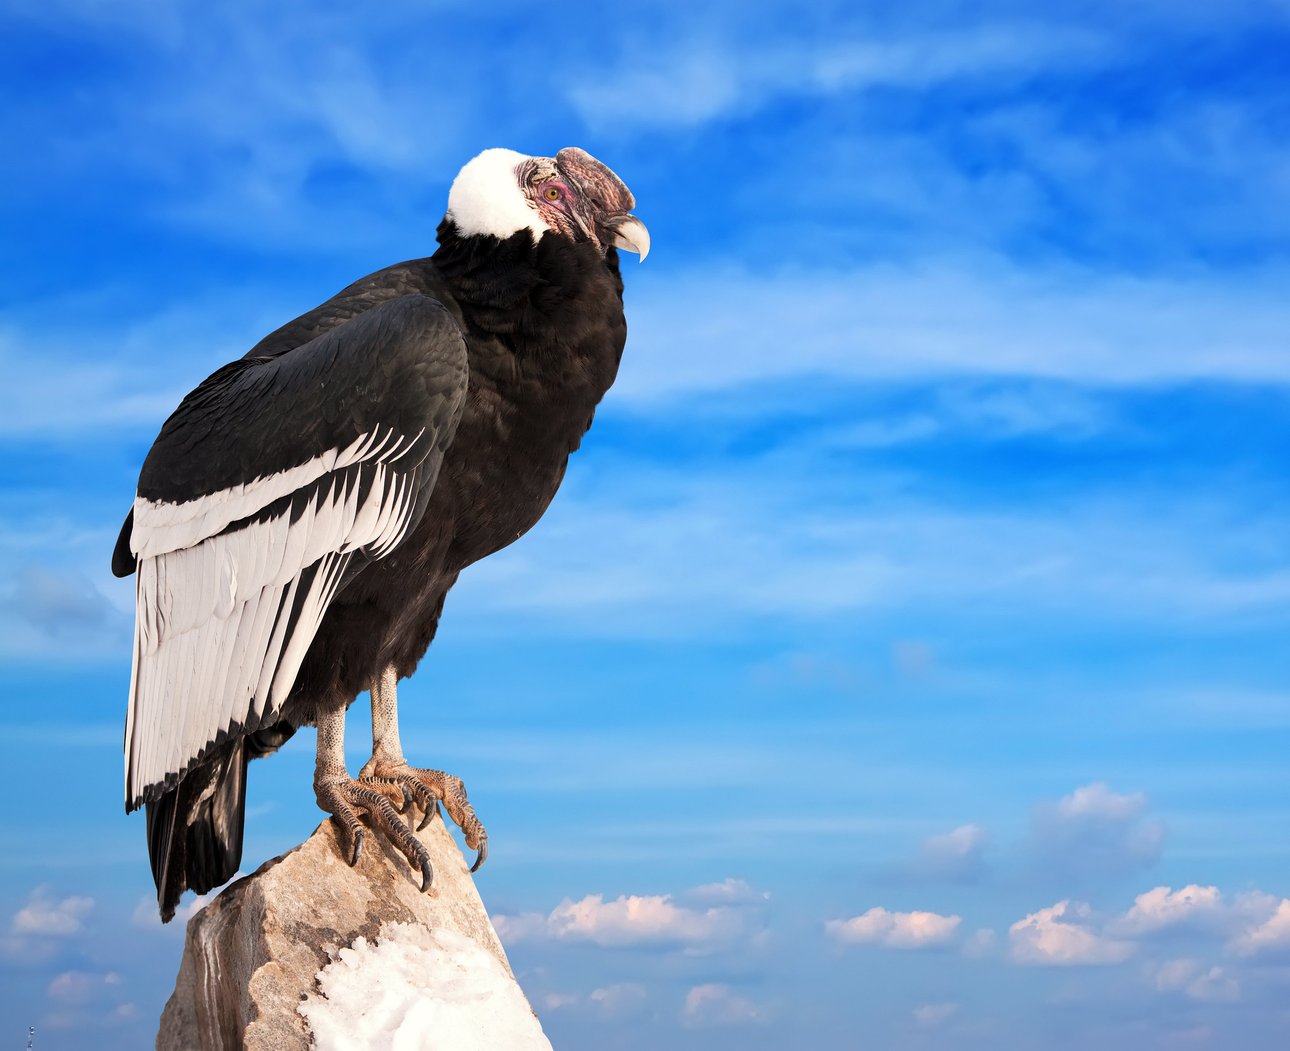 Is the Condor Really Bigger than a Sparrow? - Birds Of The Wild